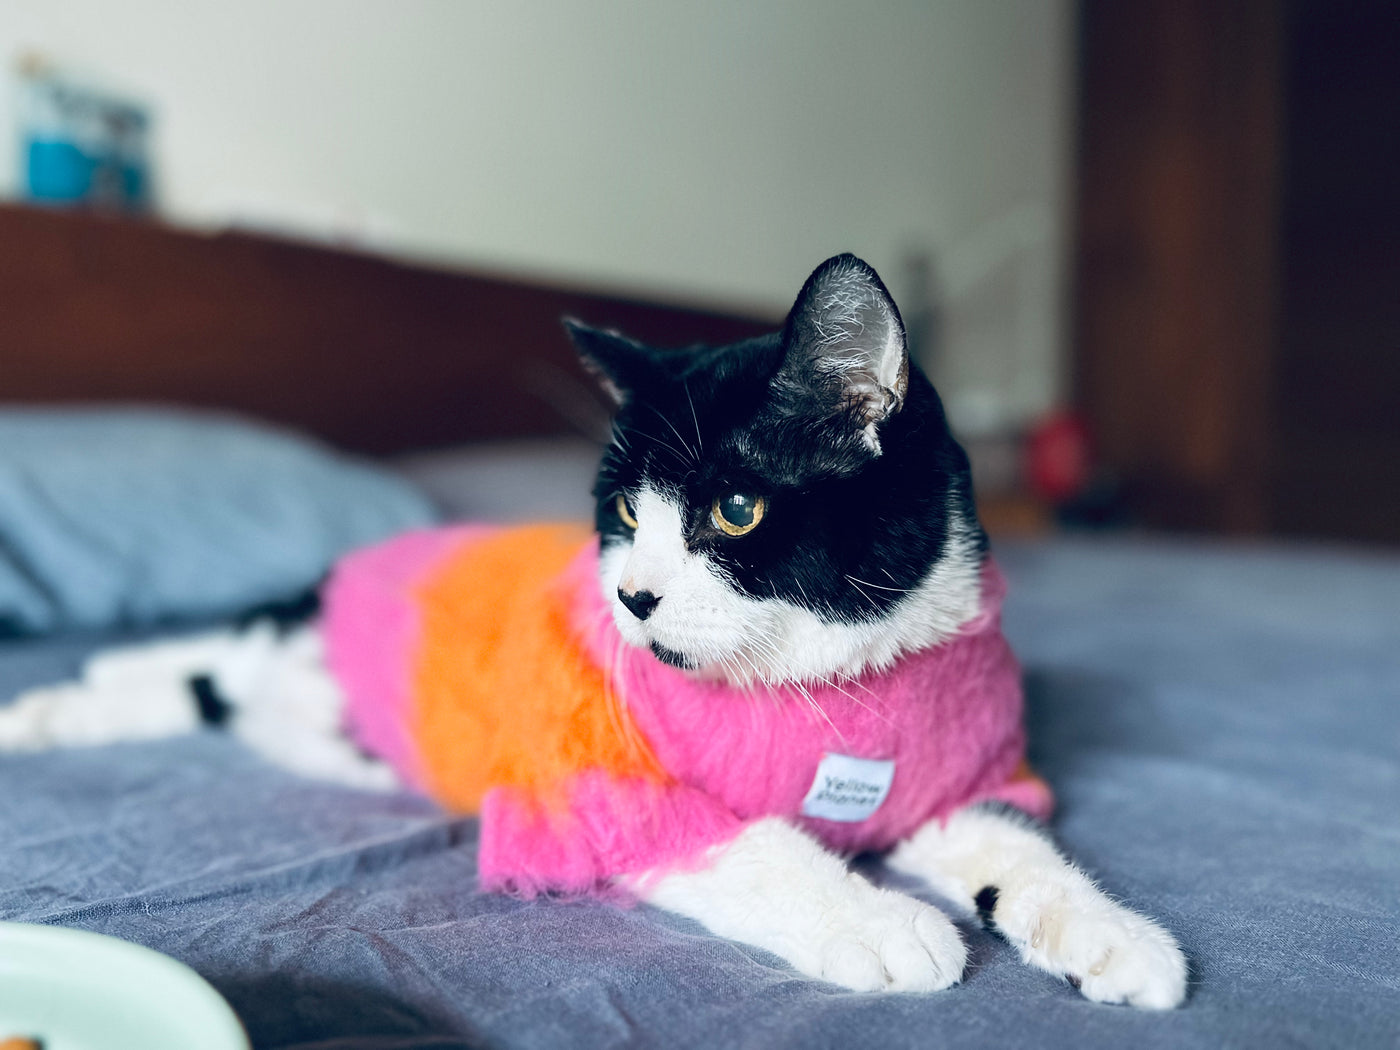 Fuwa Fuwa Pet Sweater